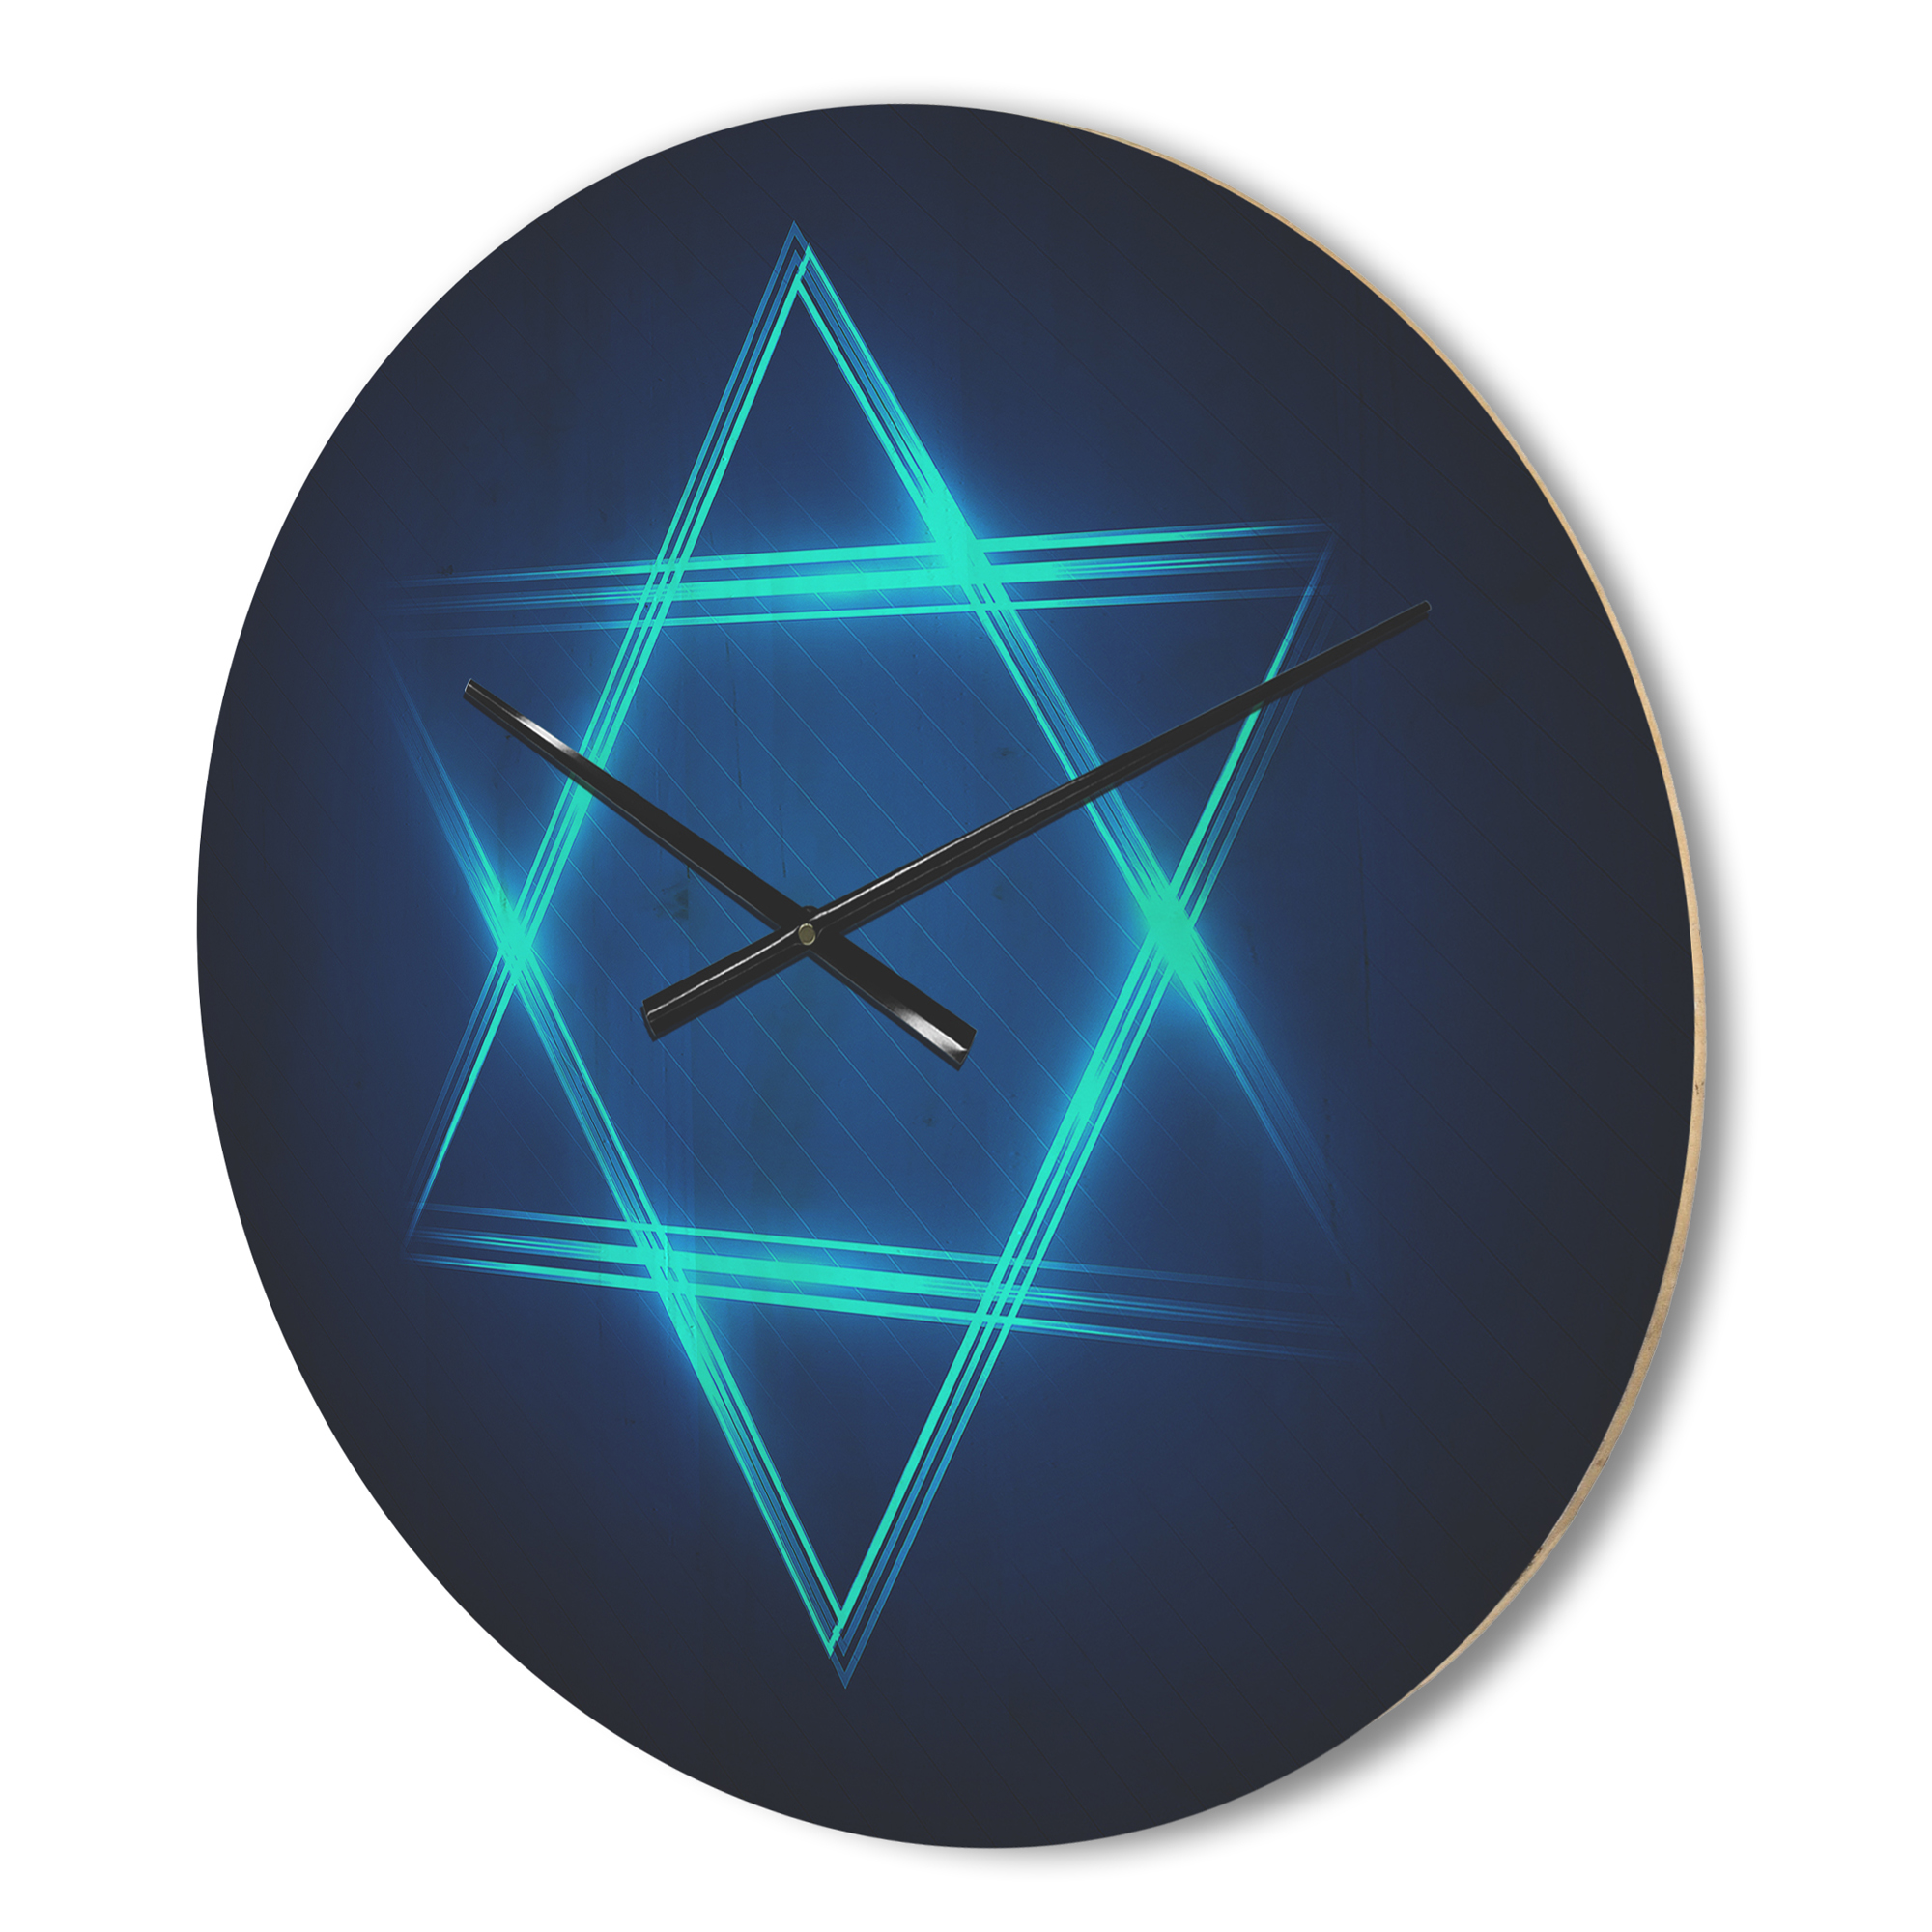 Designart 'Blue Neon Star of David' Modern Wood Wall Clock - image 3 of 5